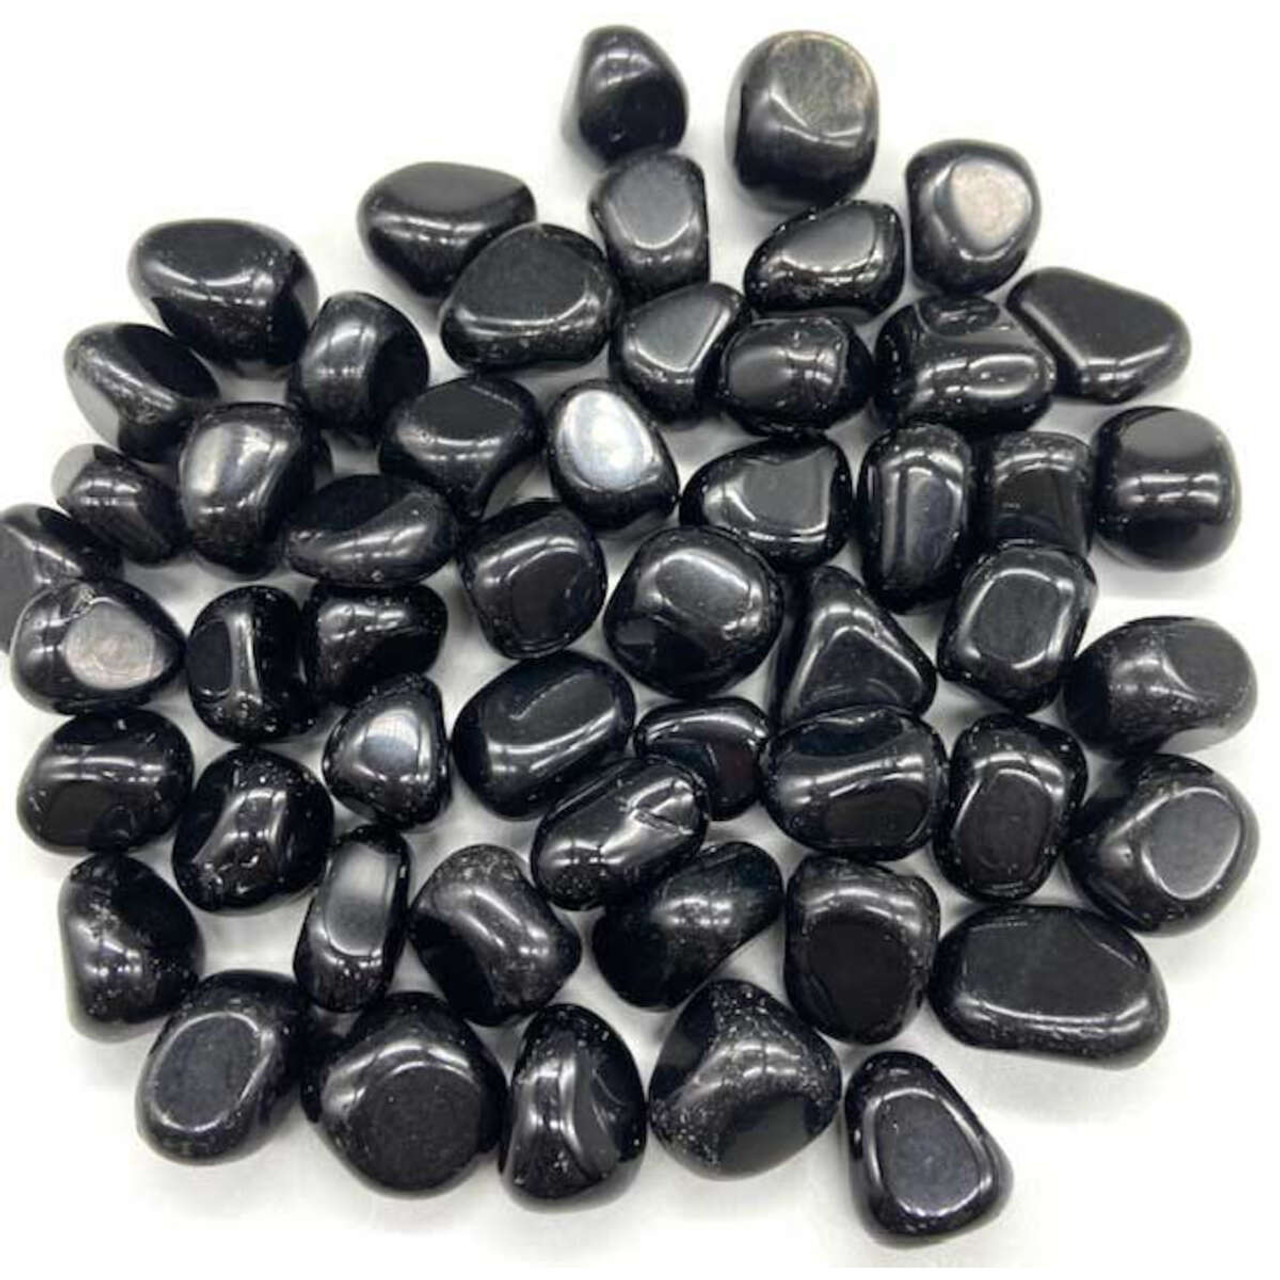 Obsidian Tumbled Gemstones 1 lb.